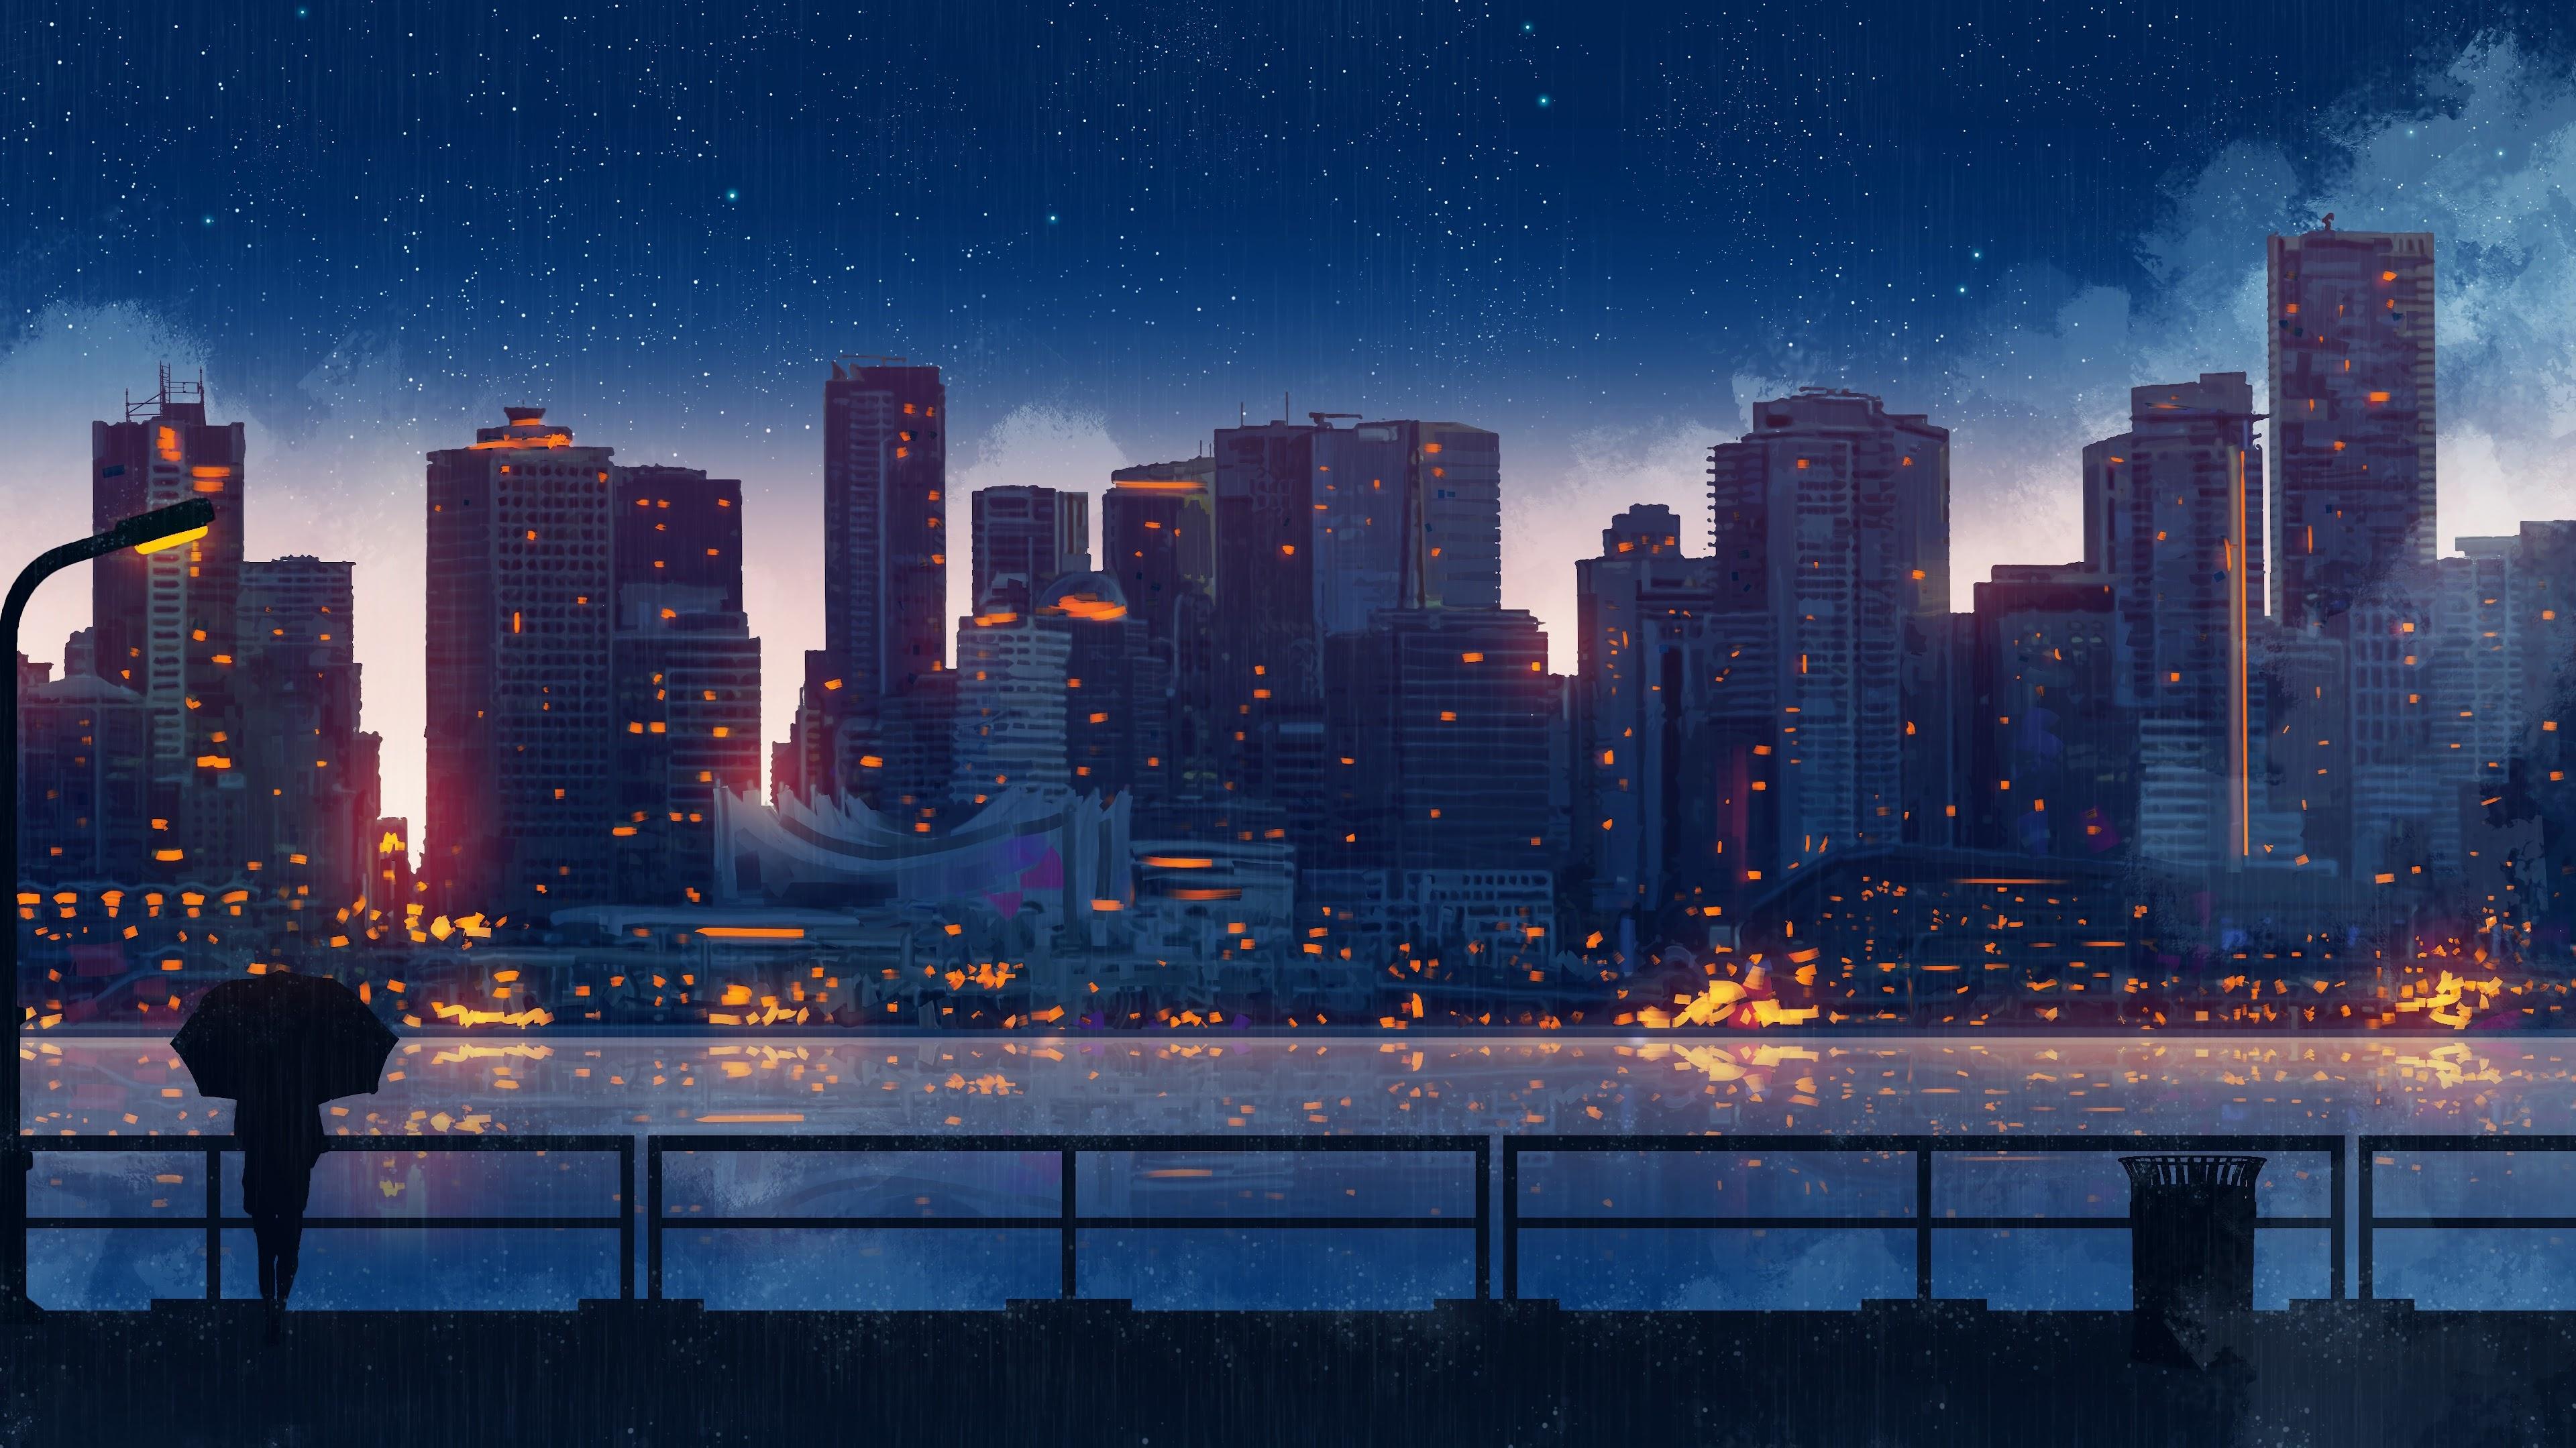 26+] Aesthetic Anime Sky Wallpapers - WallpaperSafari